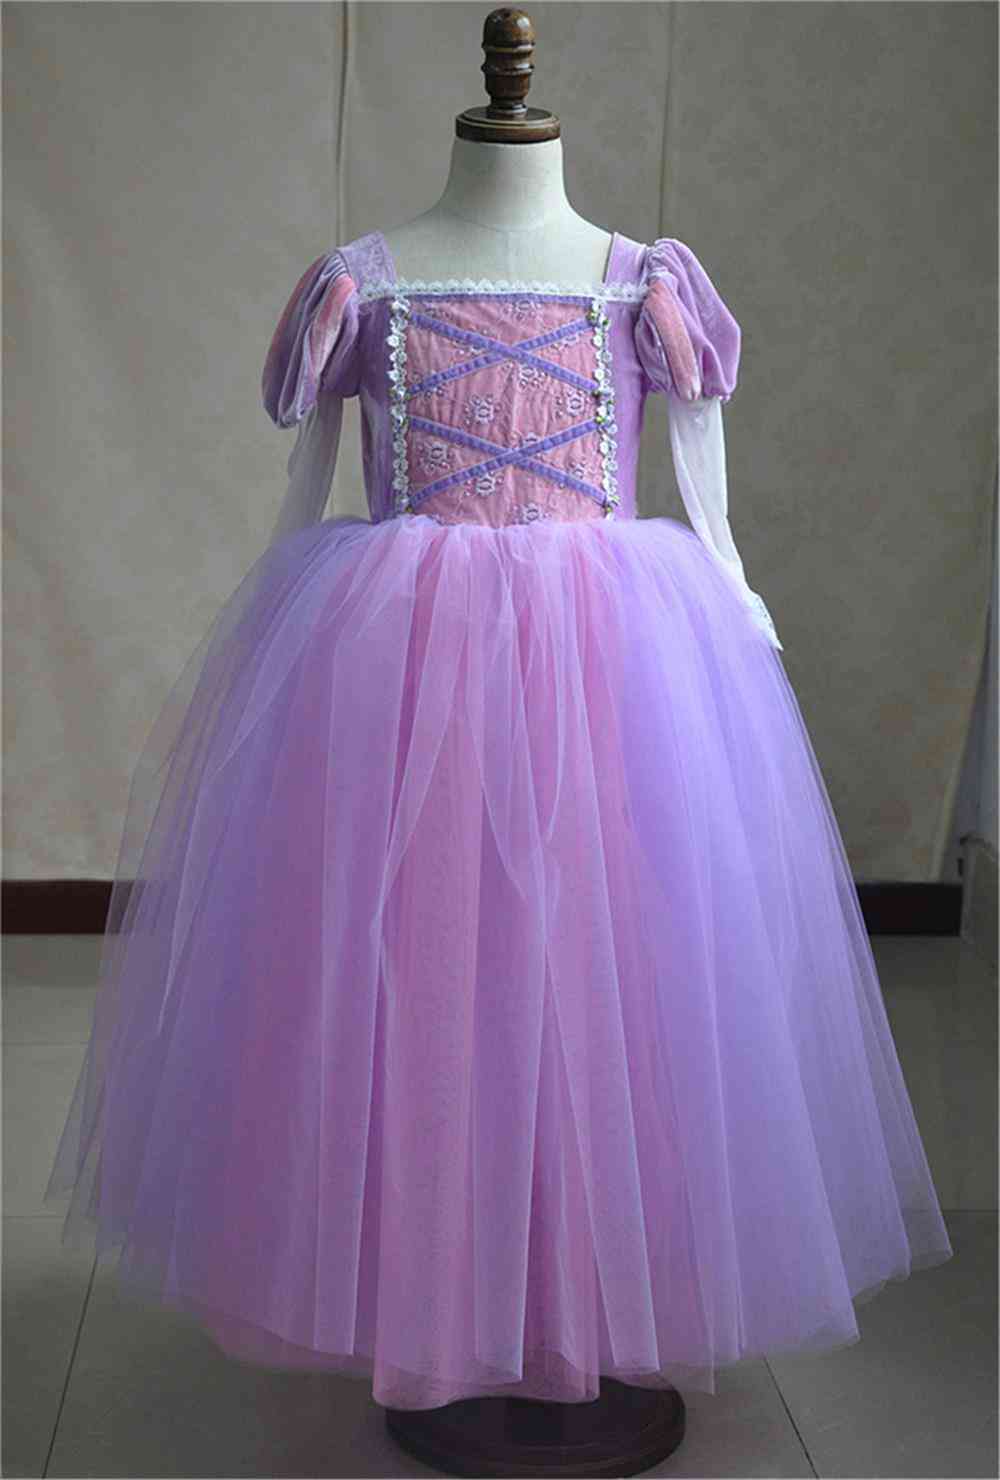 Parrucca rapunzel ragazza di alta qualità + vestito da principessa (set 1)